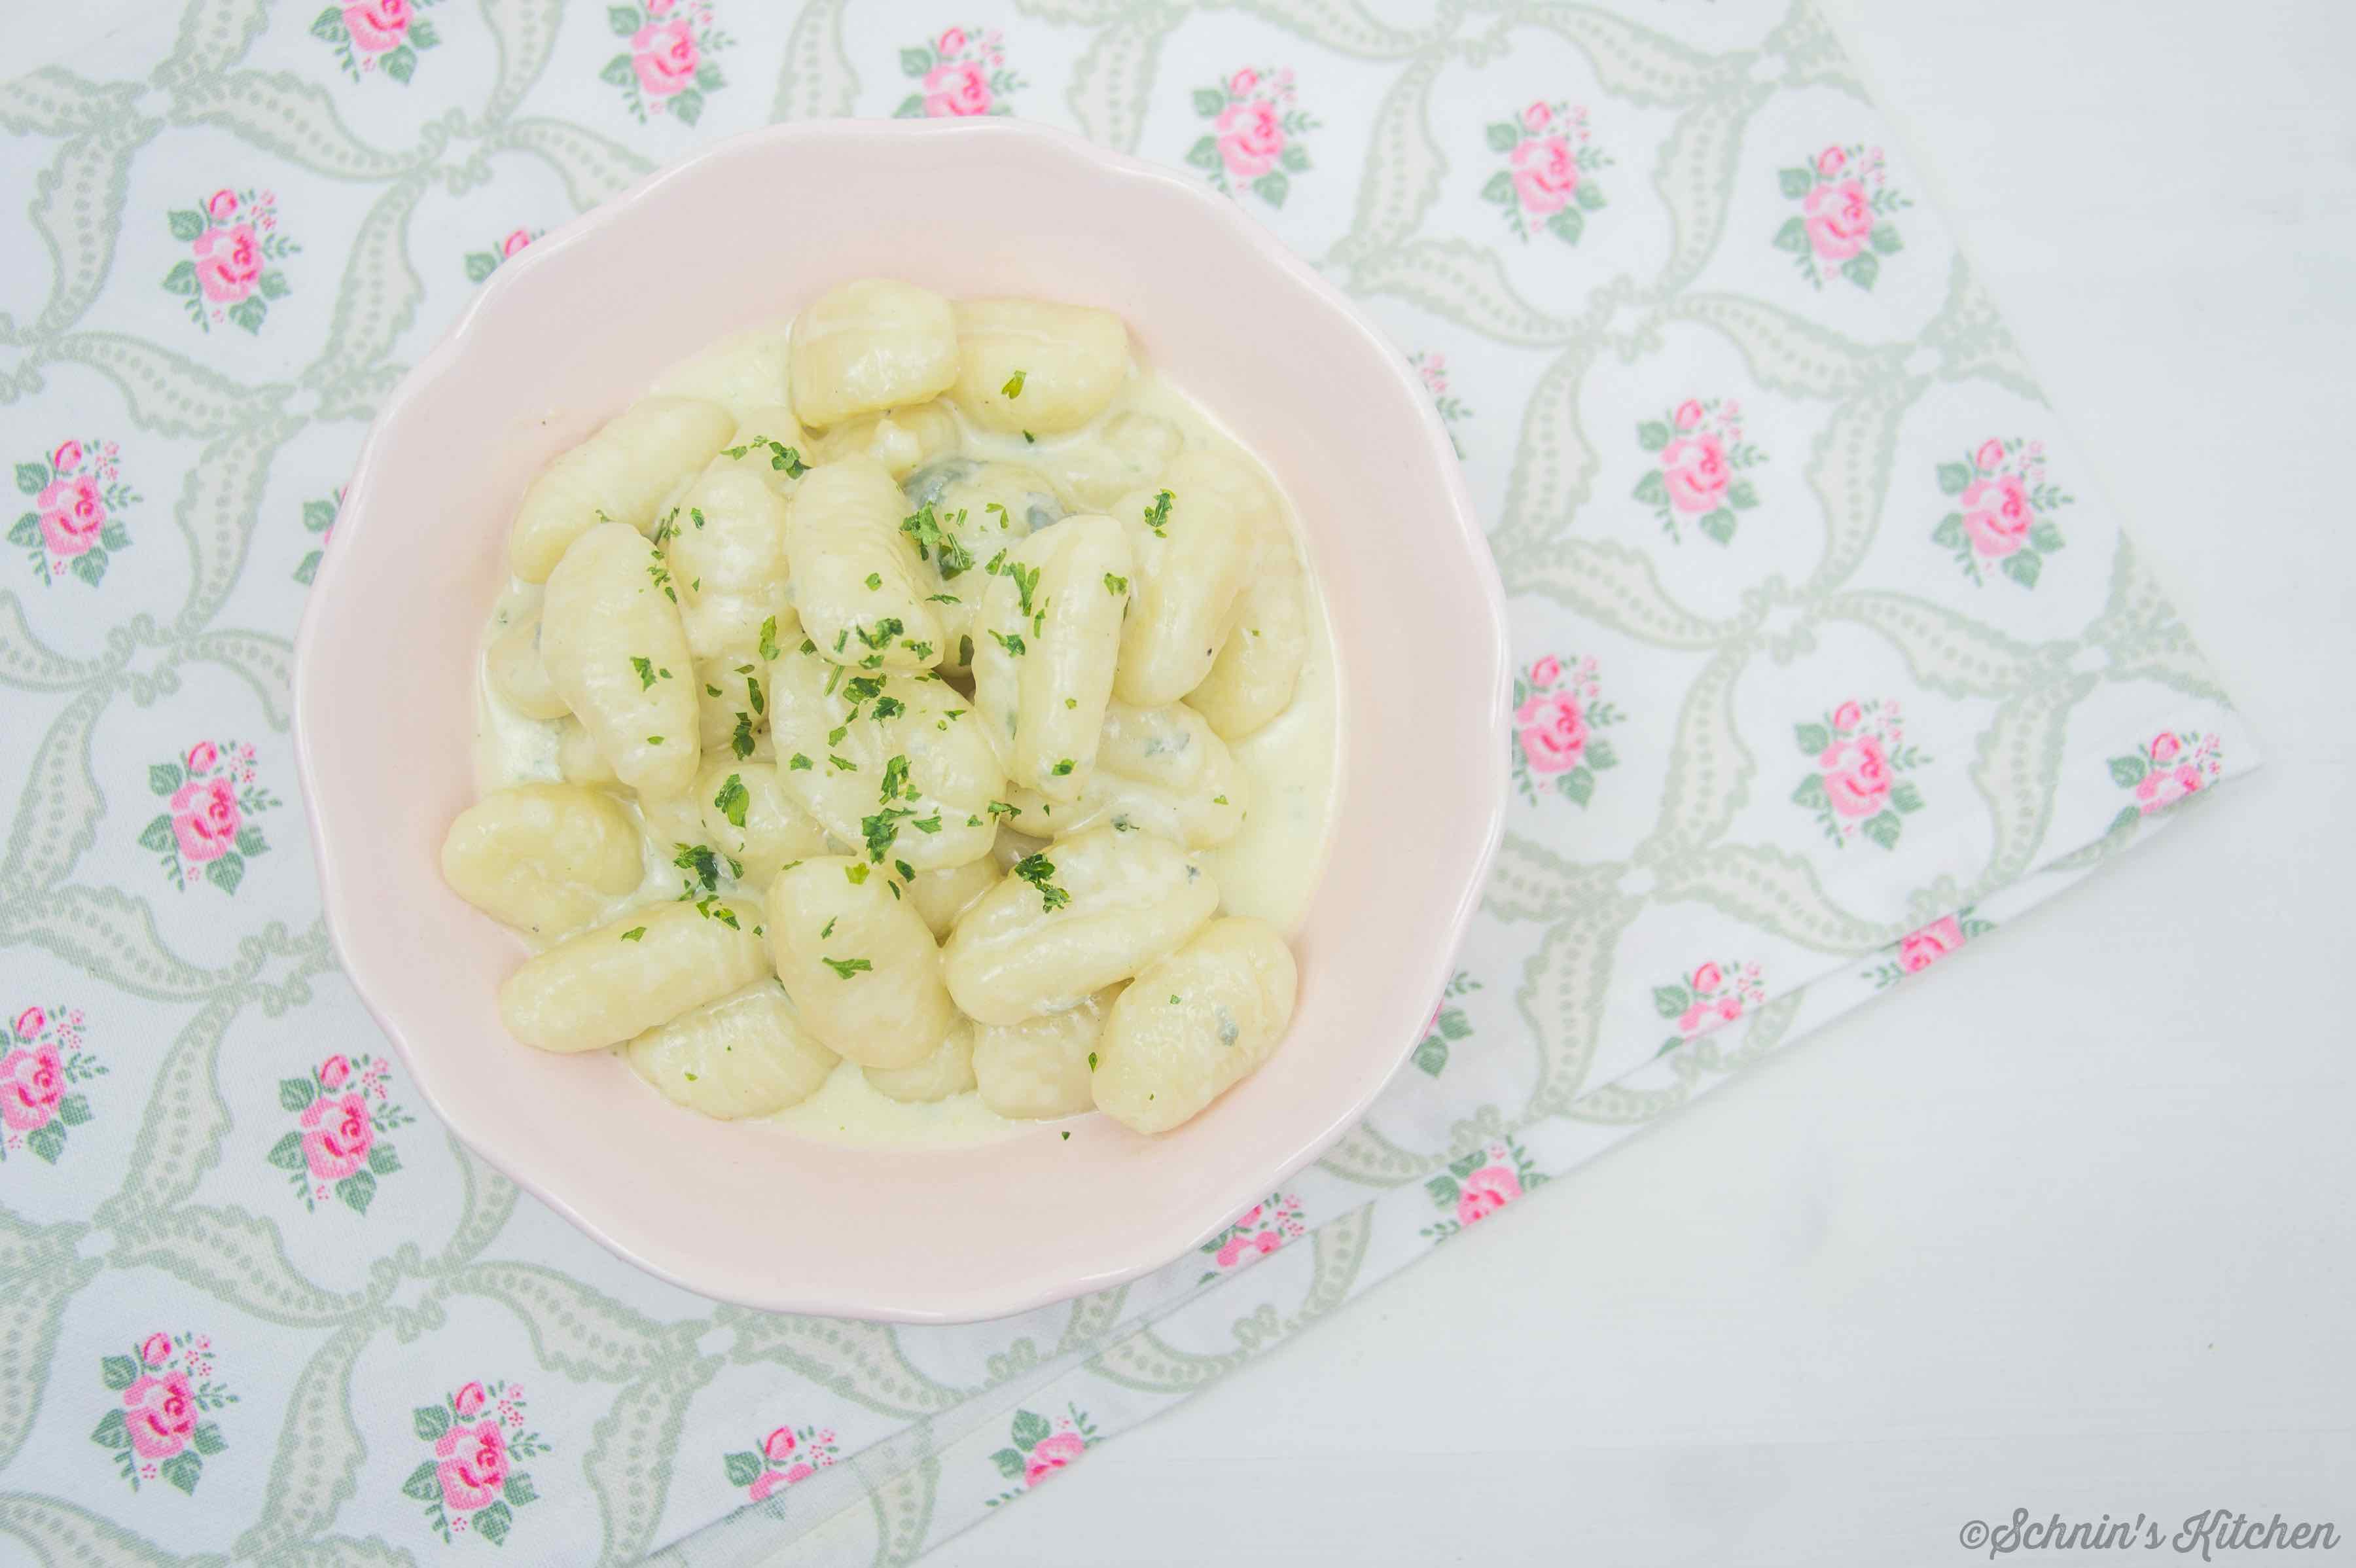 Schnin's Kitchen: Gnocchi al Gorgonzola